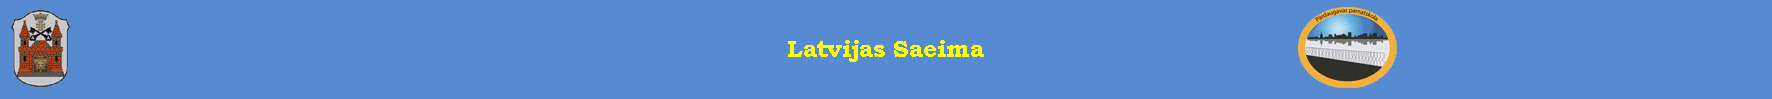 Latvijas Saeima